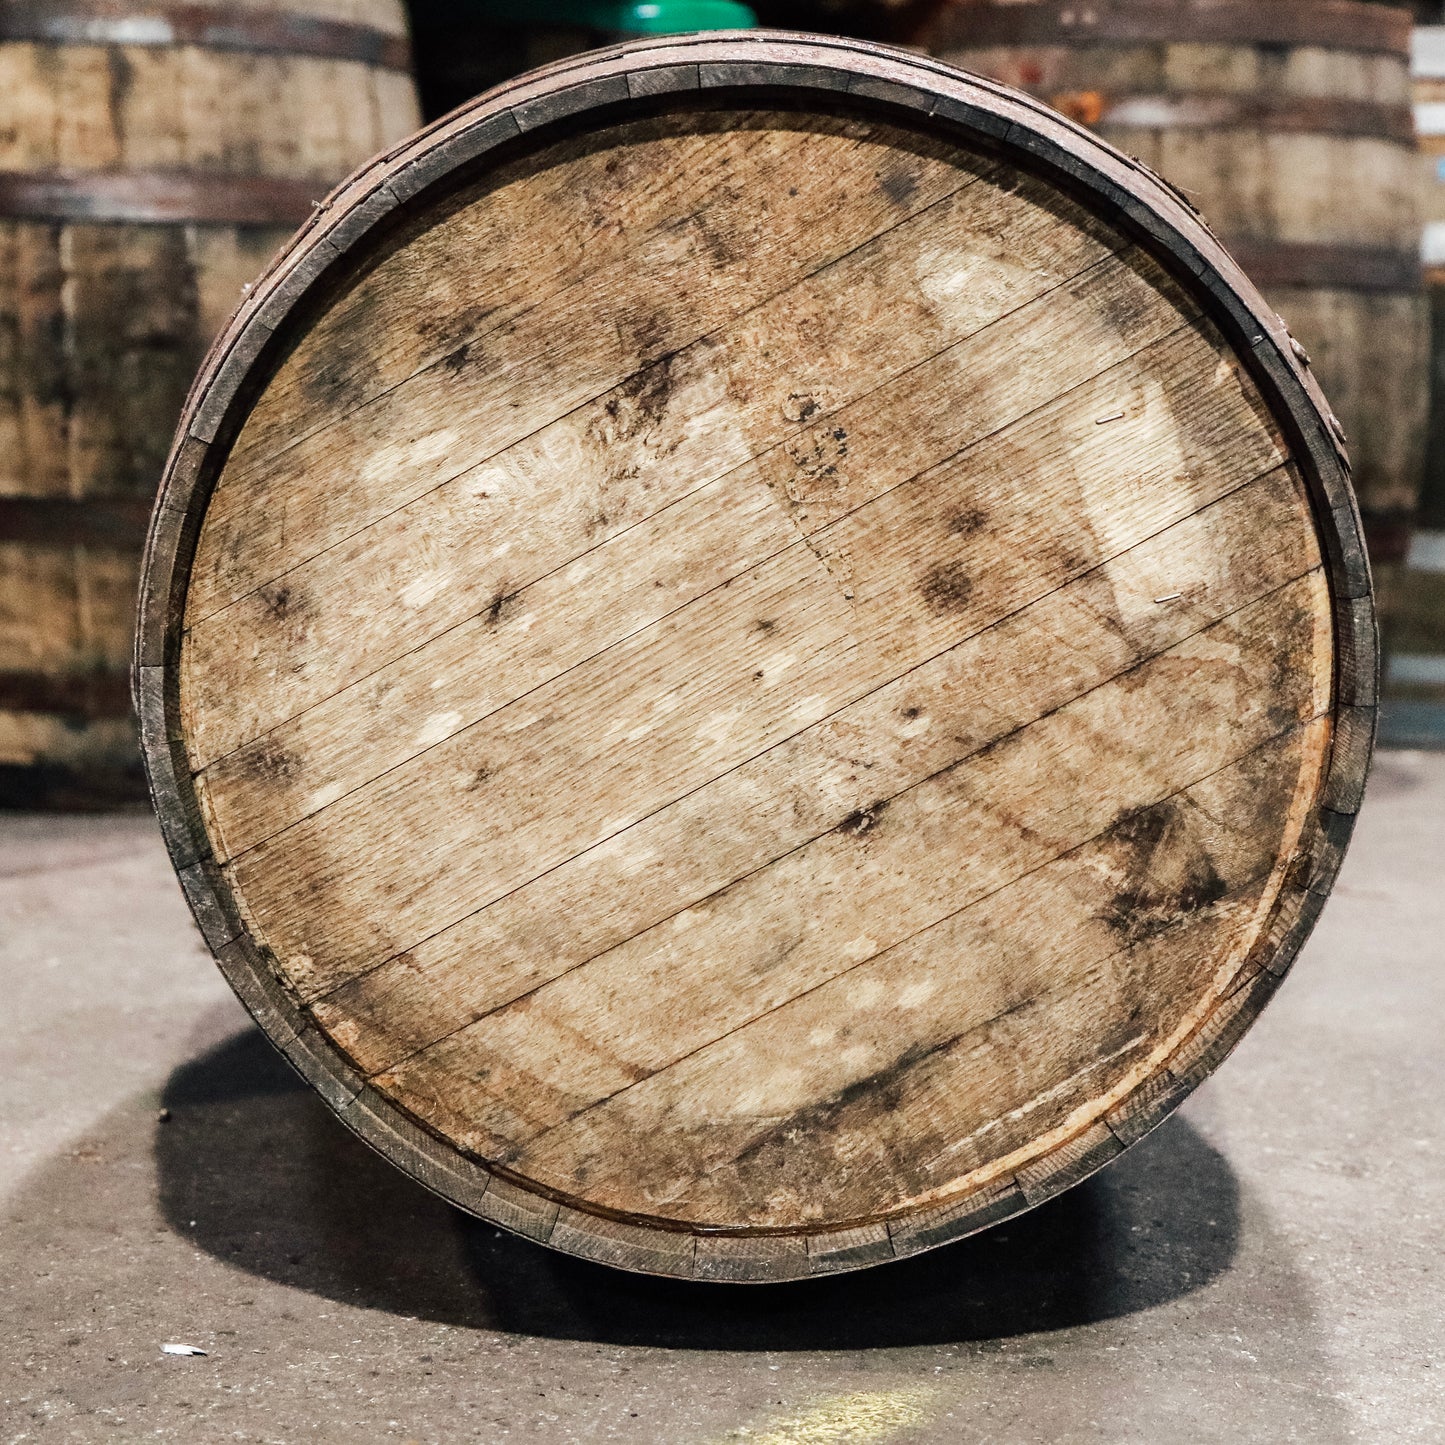 Grade B Whiskey Barrel Whole Authentic 53 Gallon - Motor City Barrels